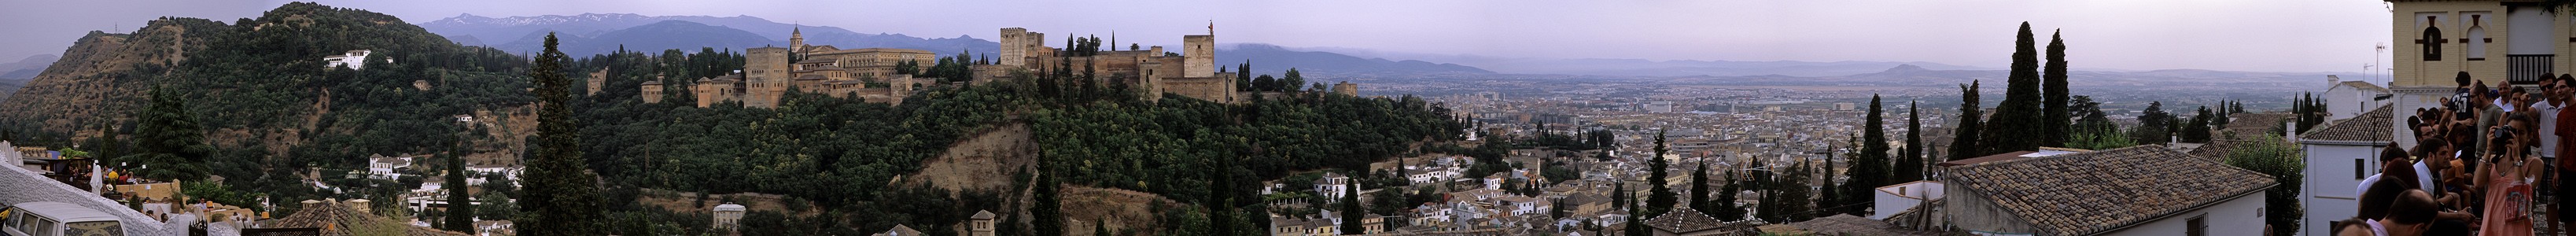 Albaicín - Alhambra - Stadtzentrum - Albaicín Granada